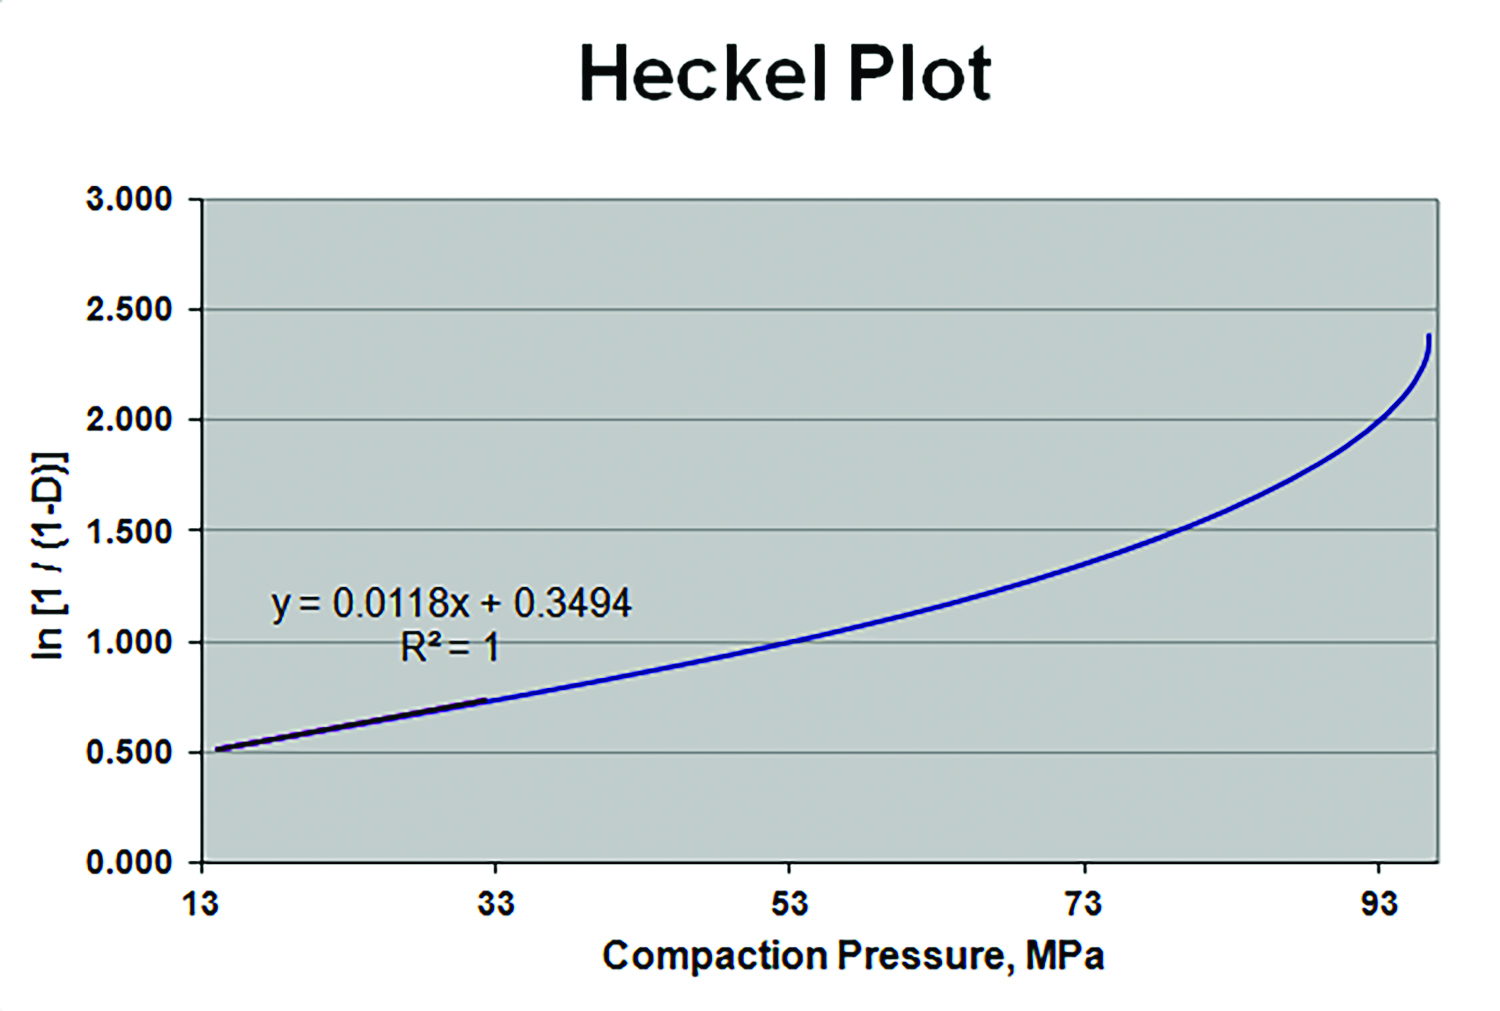 Figure 5. Tensile Strength vs. Compaction Pressure